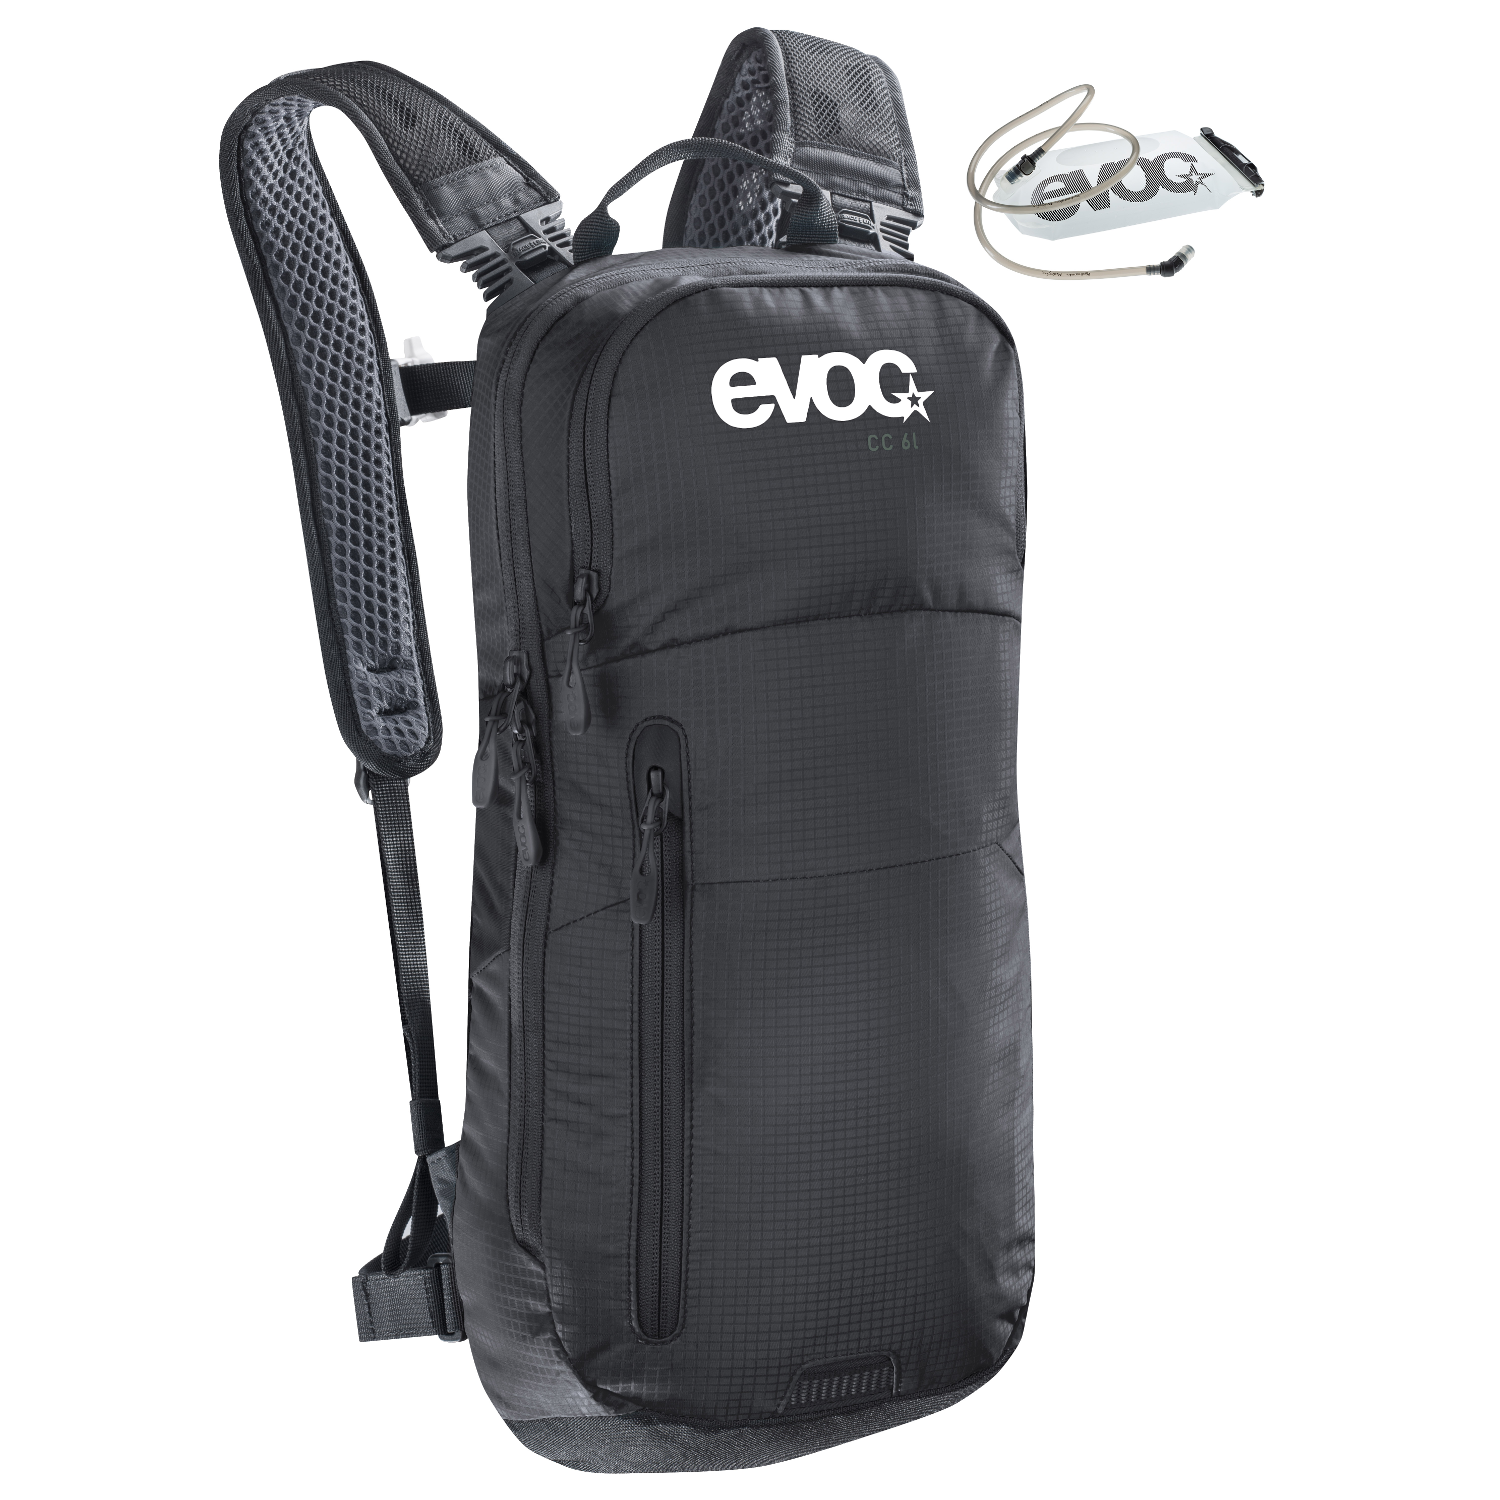 Evoc Backpack with Hydration System CC Black, 6 + 2 Liter